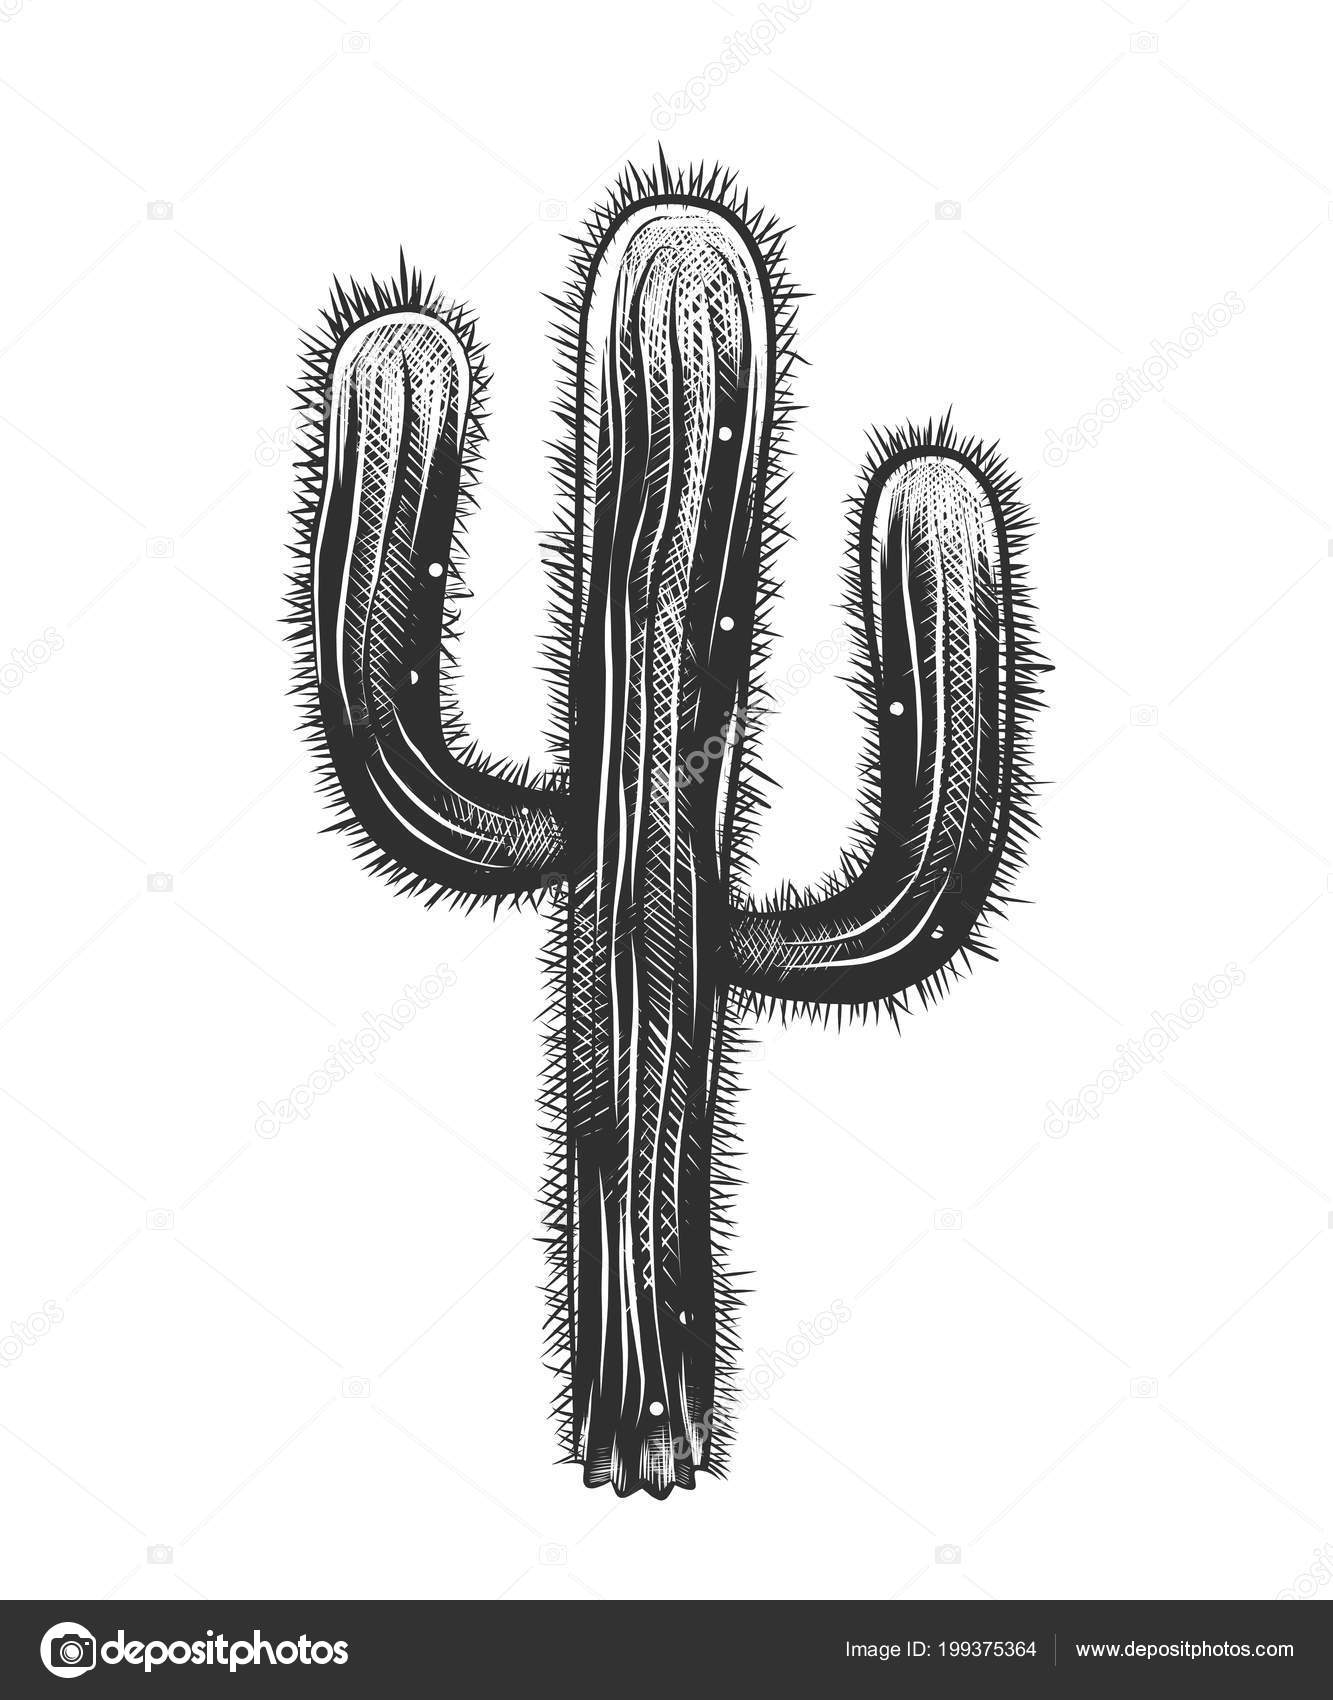 Imagens vetoriais Xilogravura cactus